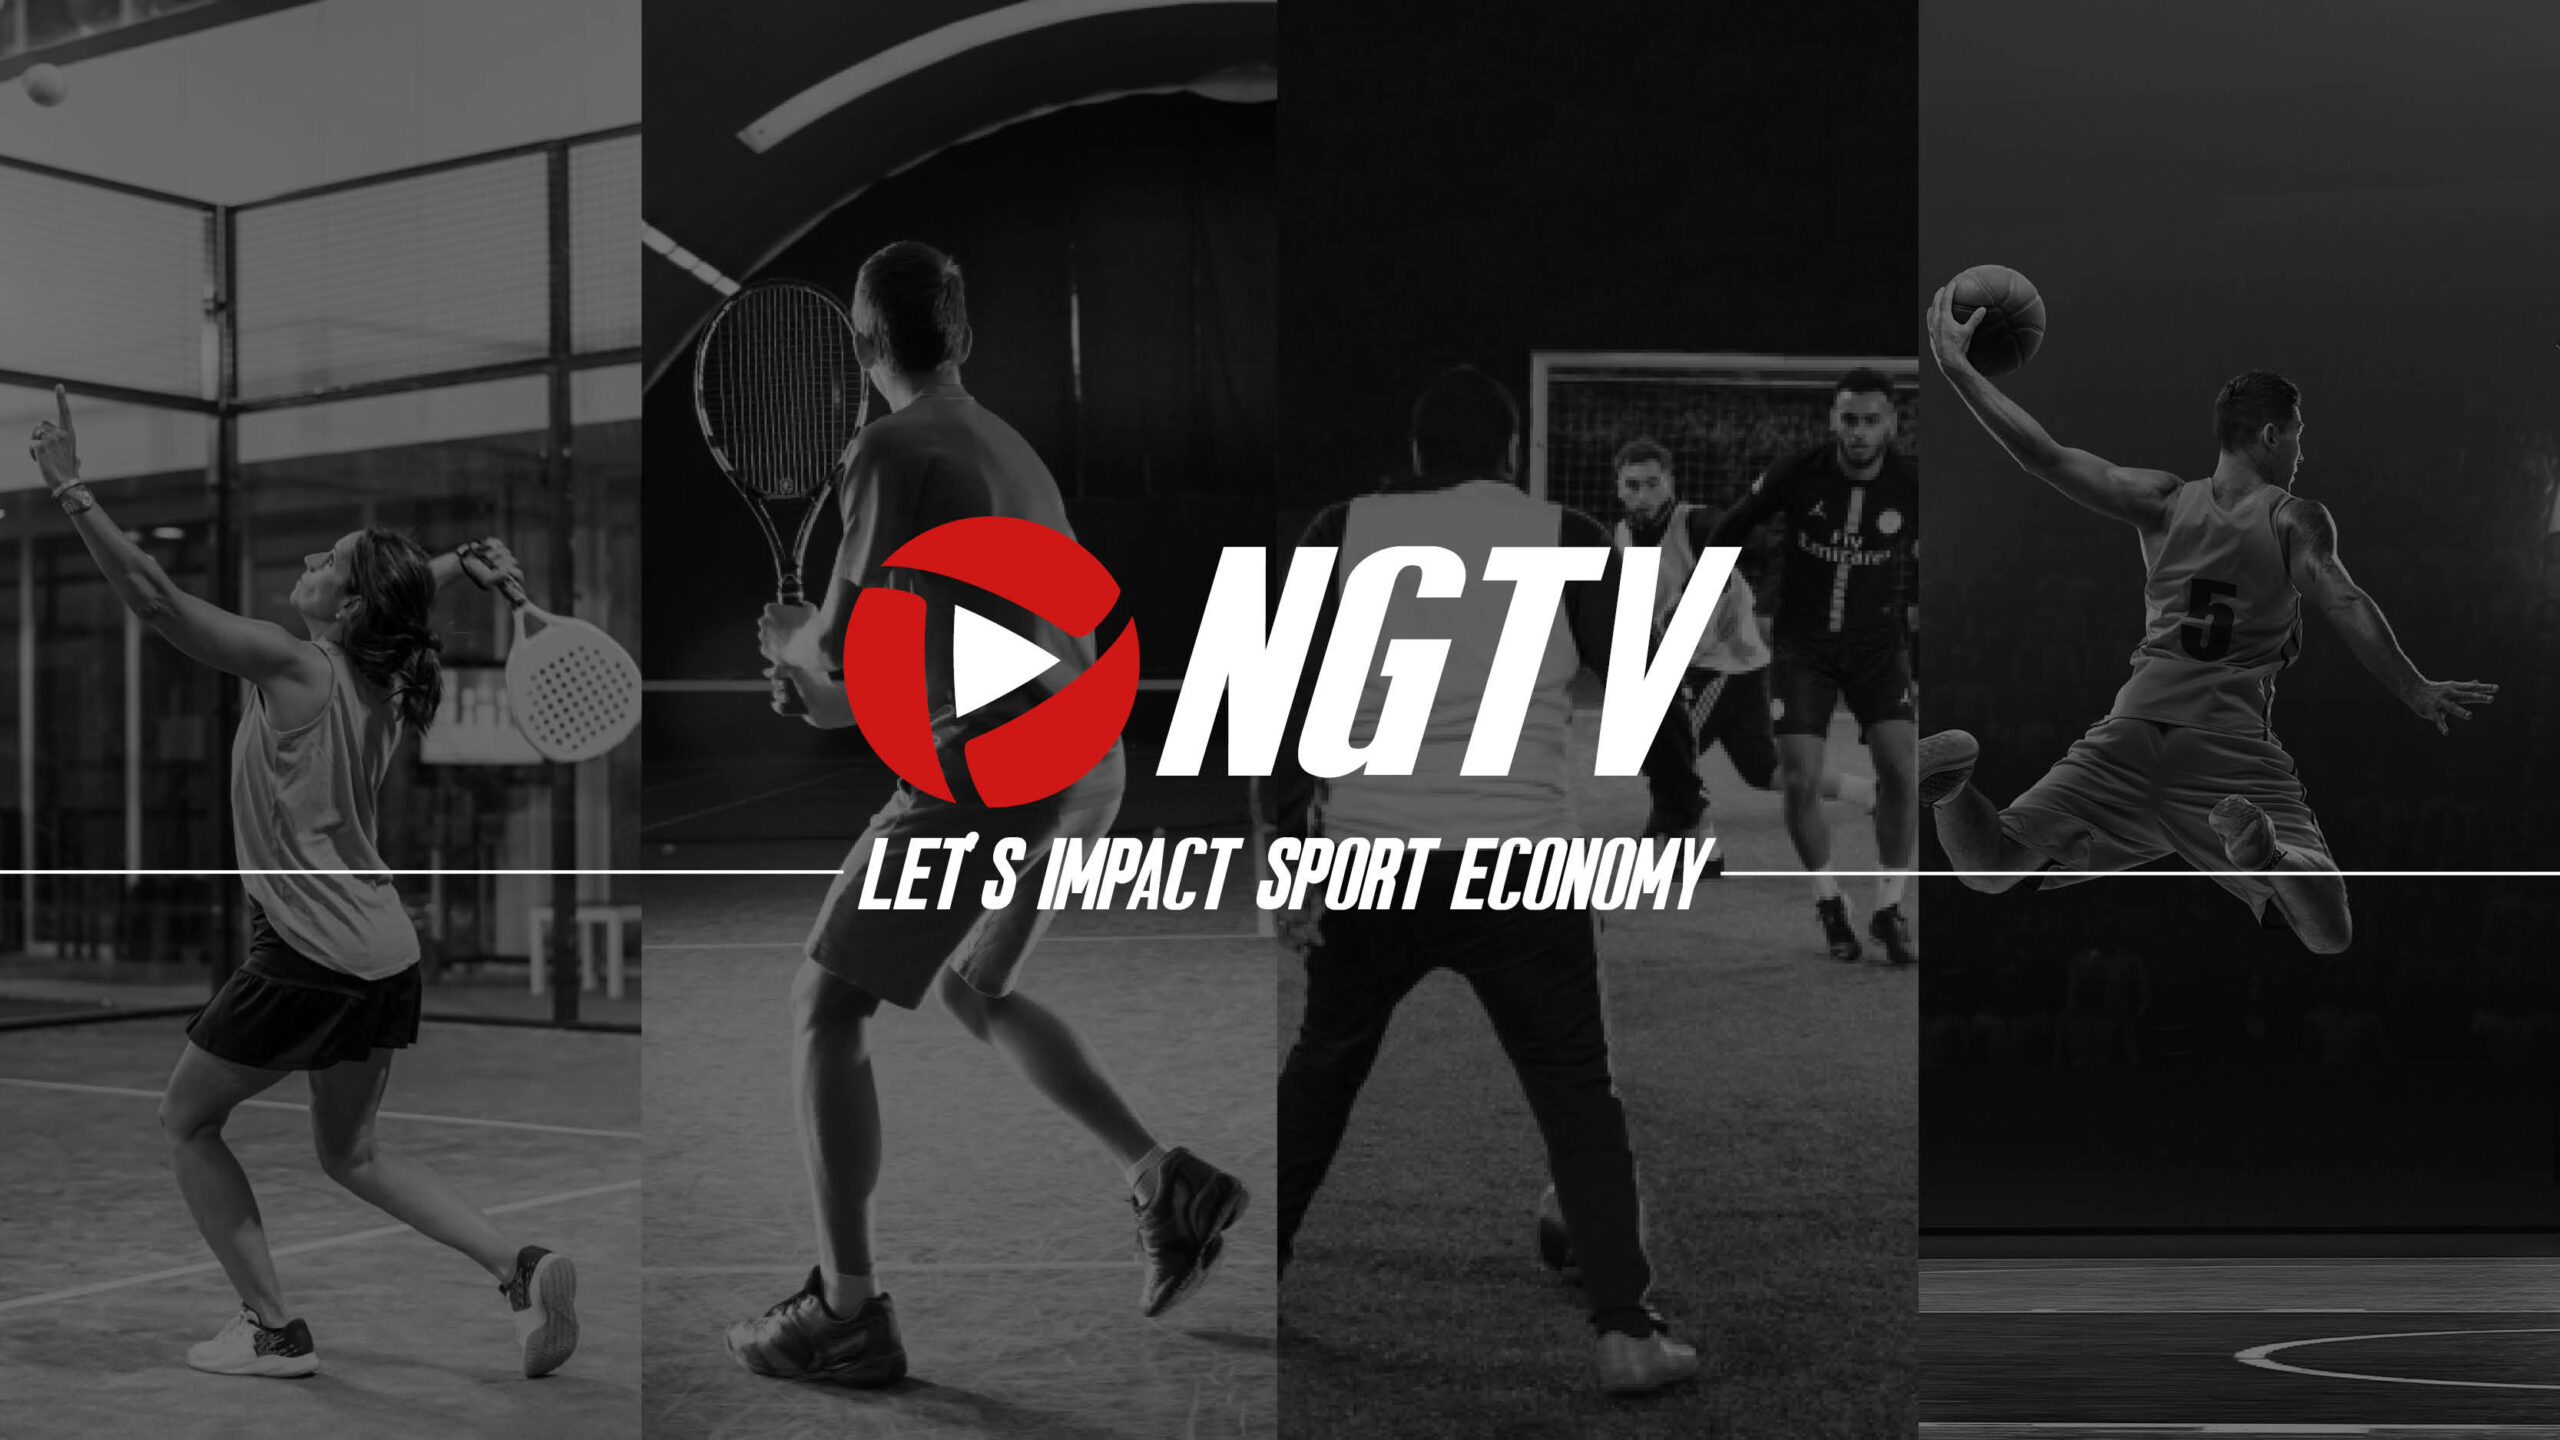 Economia esportiva de impacto NGTV